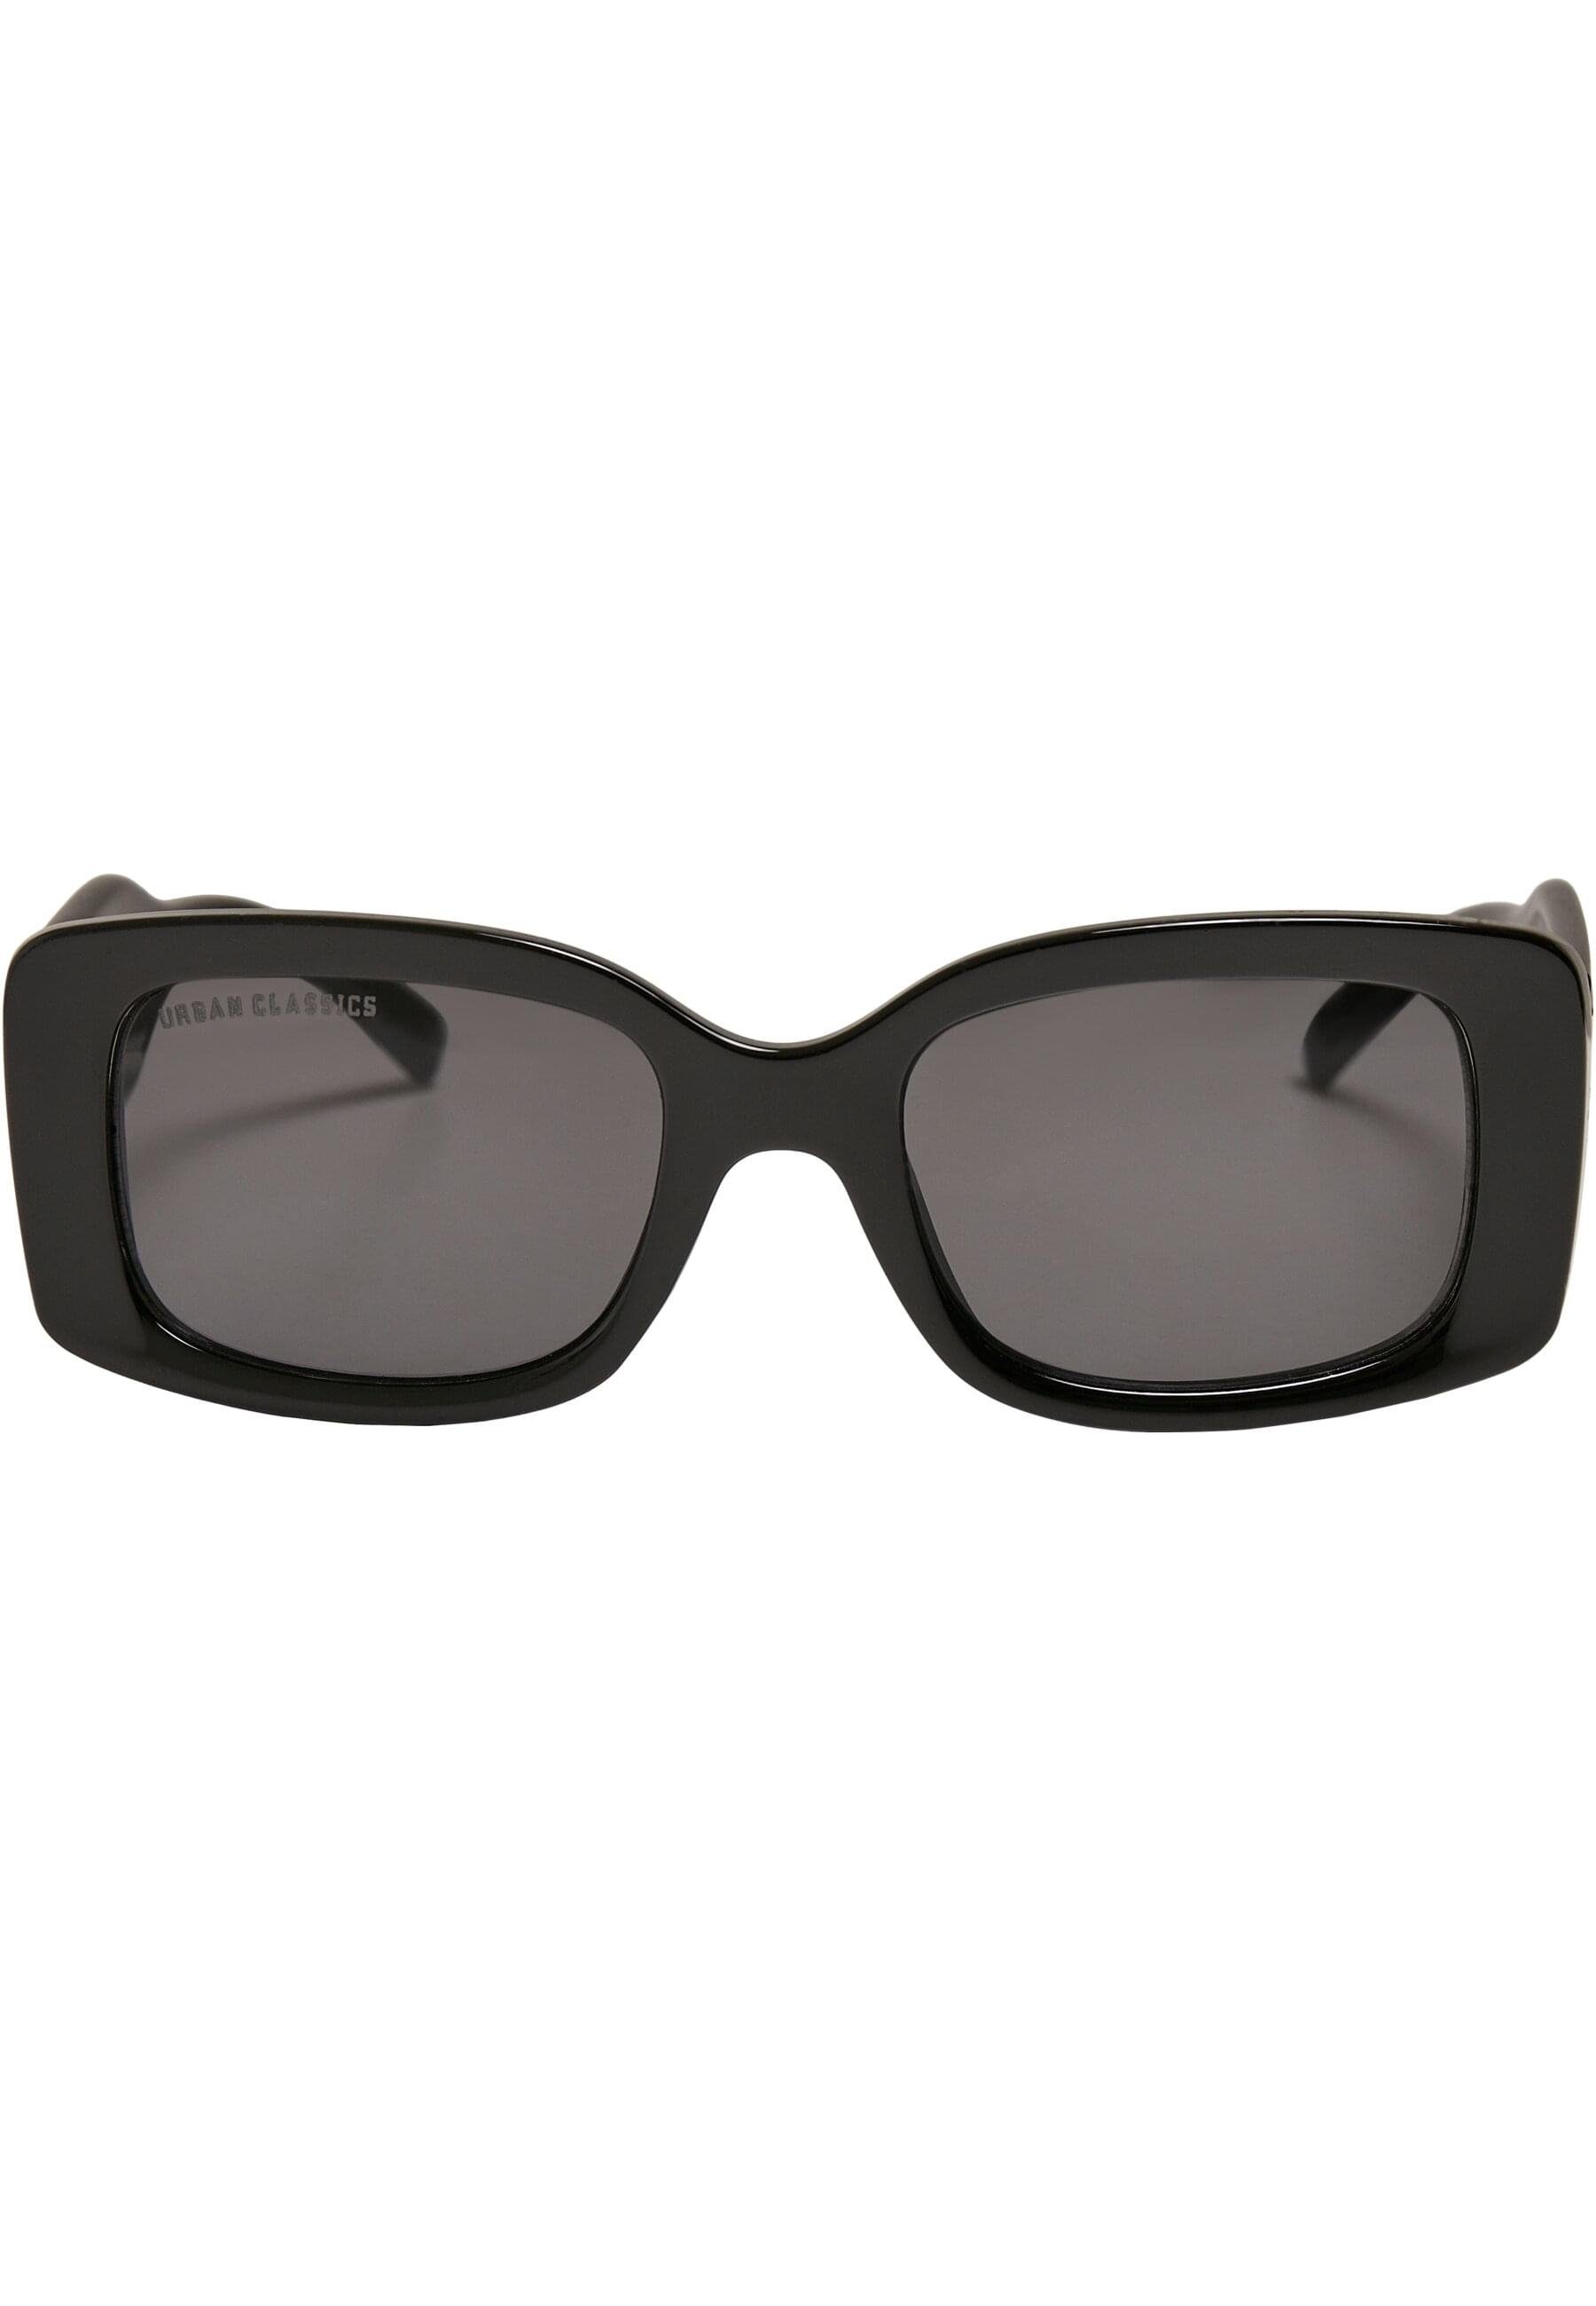 URBAN Unisex Hawai Sonnenbrille CLASSICS Sunglasses